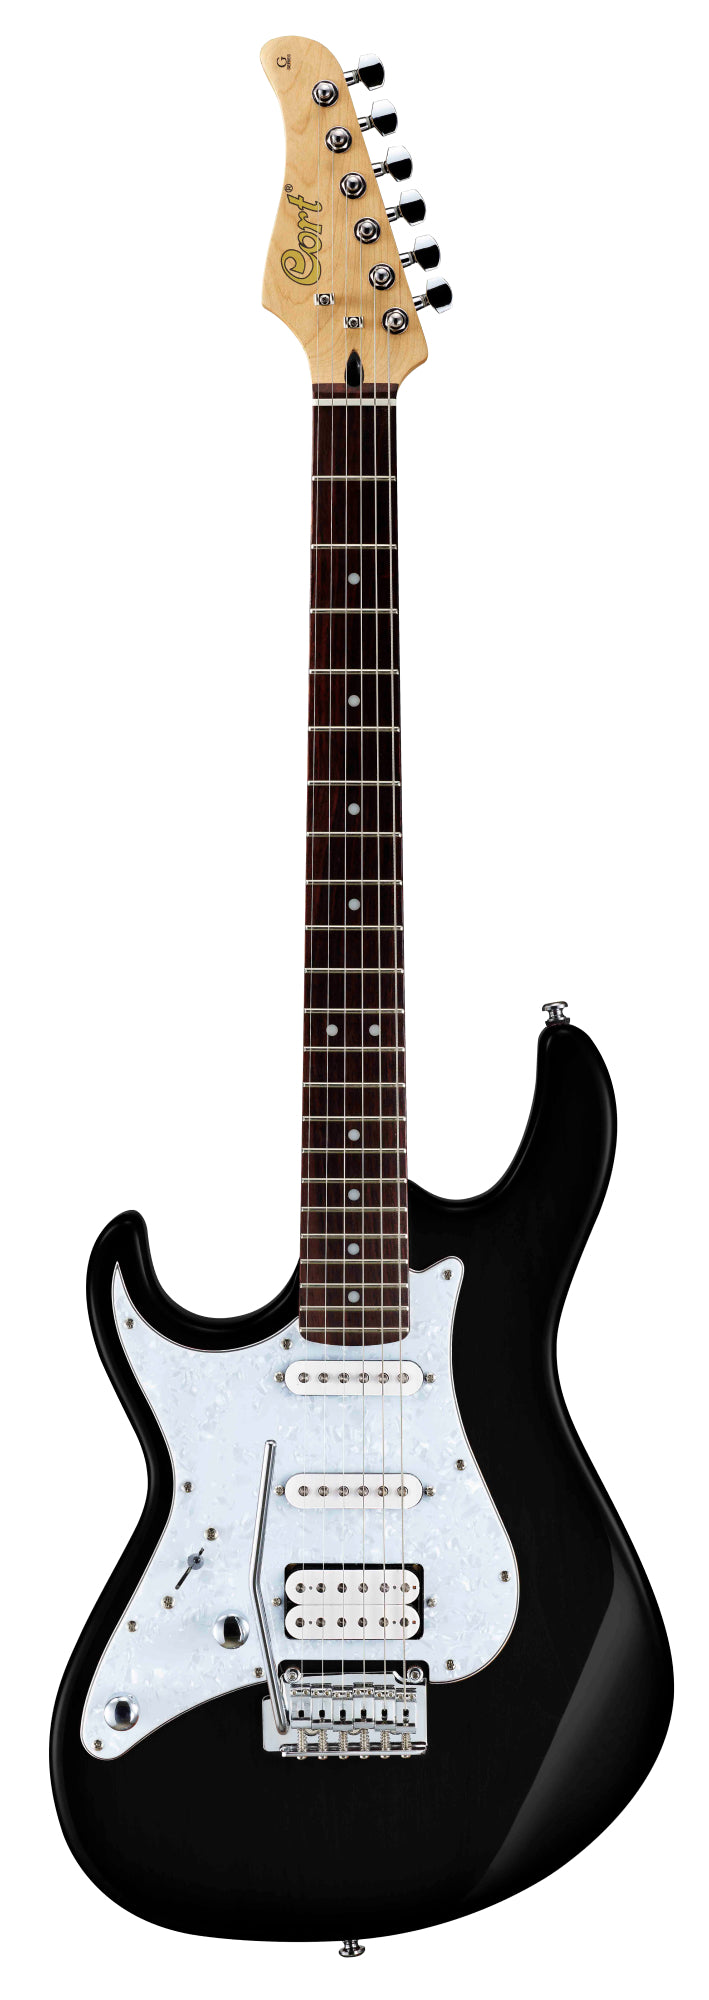 Cort G250 LH Black, Electric Guitar for sale at Richards Guitars.